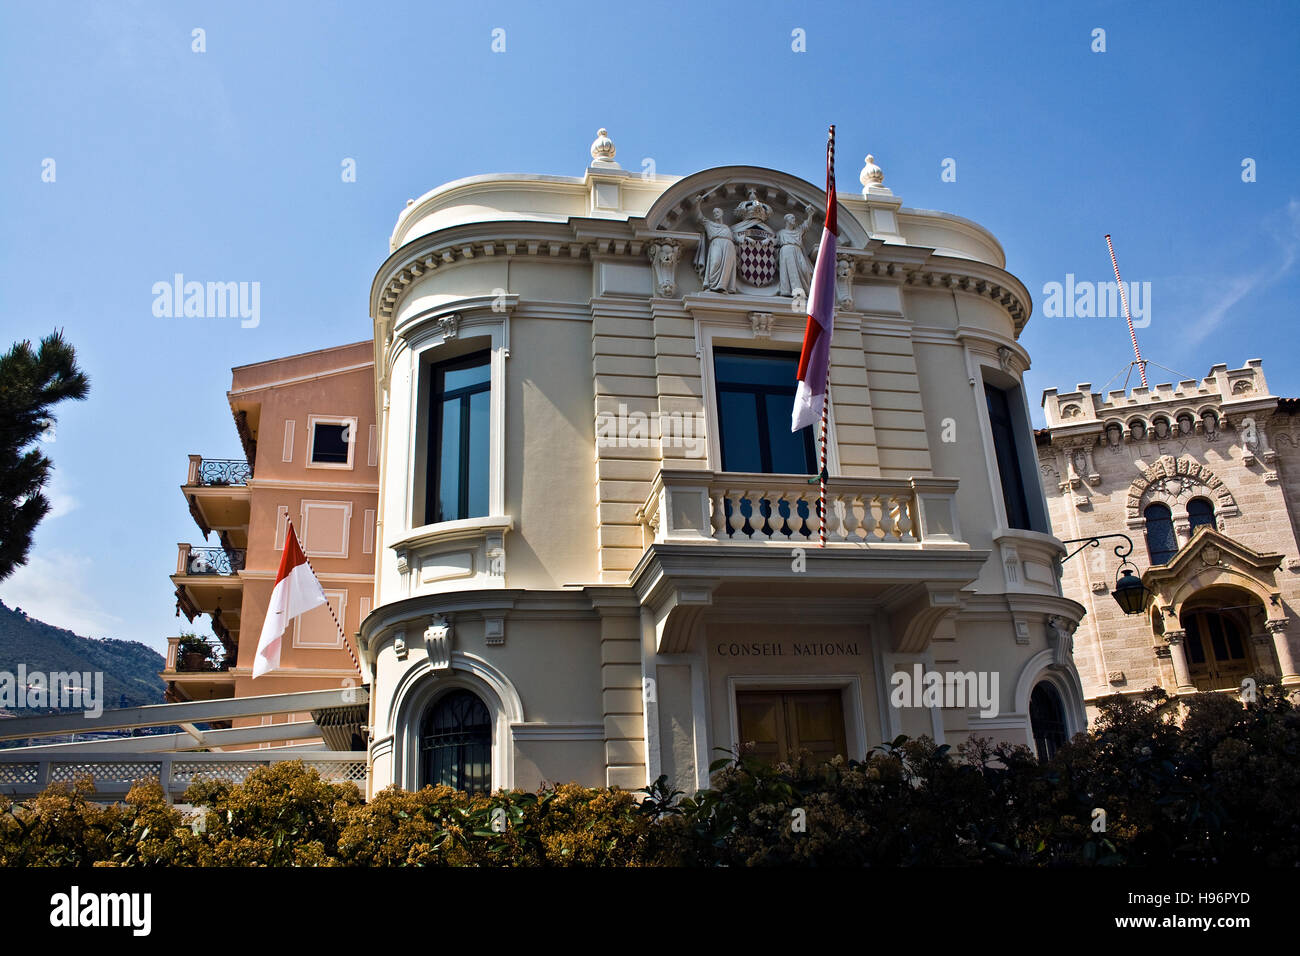 Conseil National de la Principauté de Monaco, Principauté de Monaco, Europe Banque D'Images